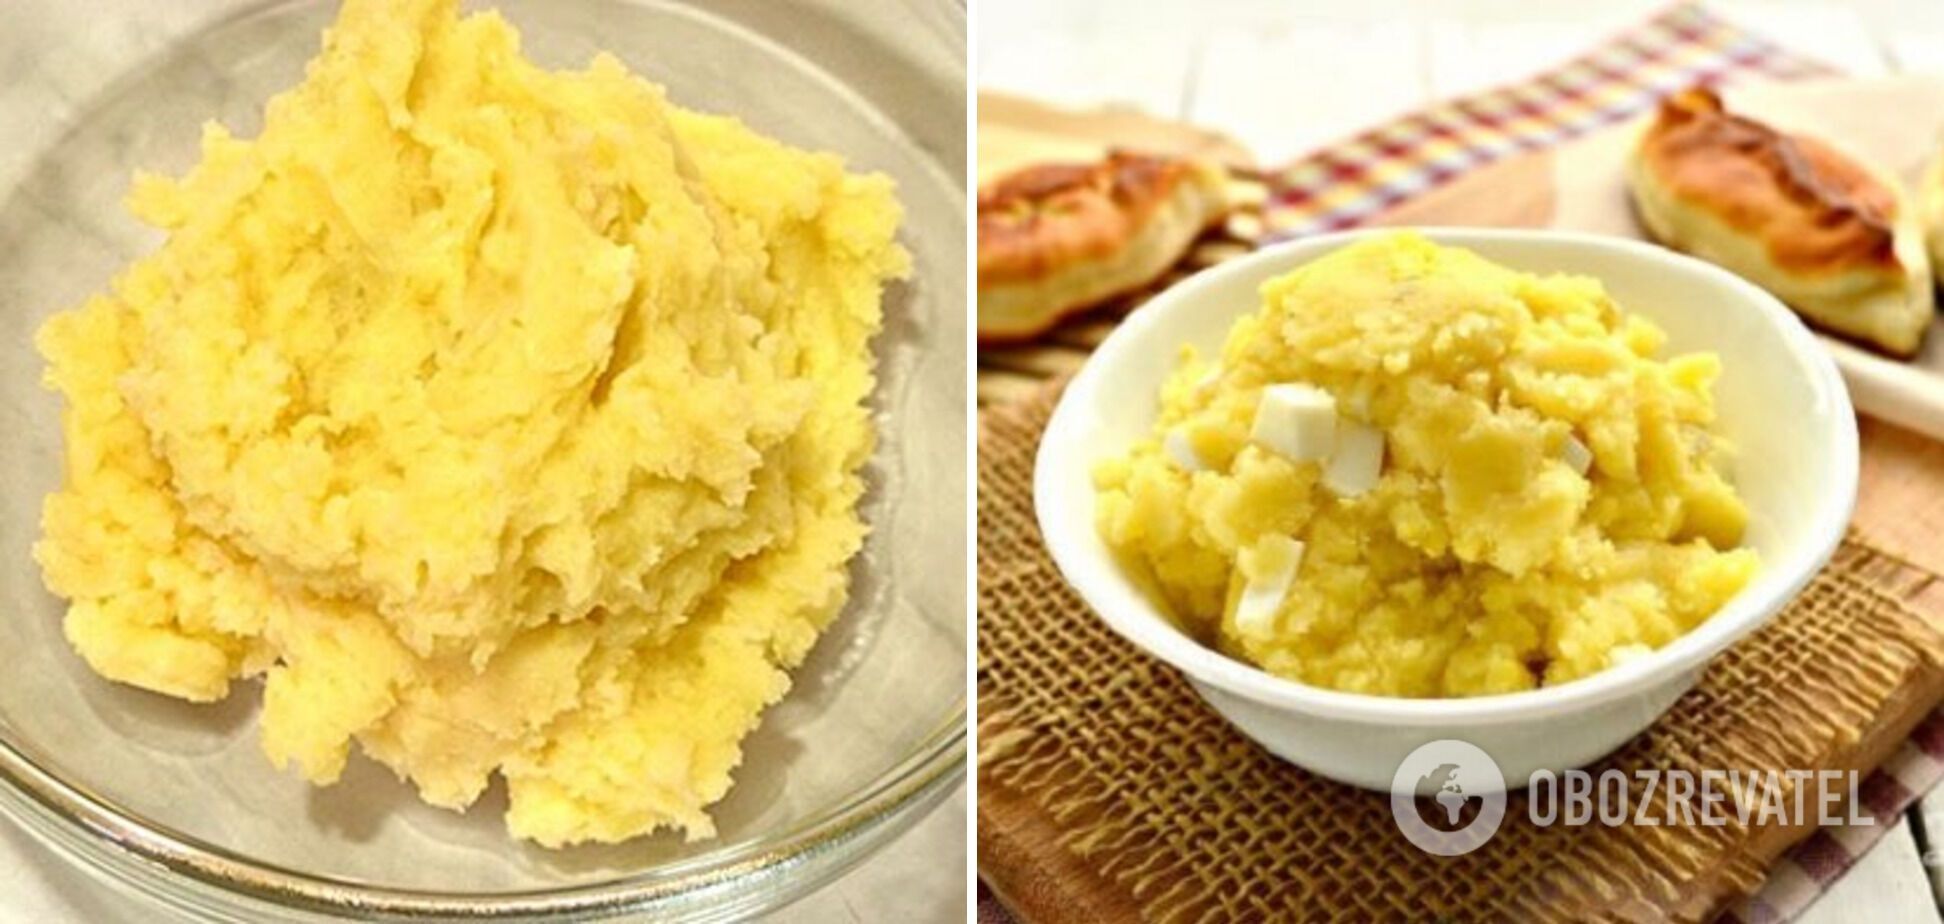 Як запекти картоплю без духовки за 10 хвилин, рецепт швидкої вечері